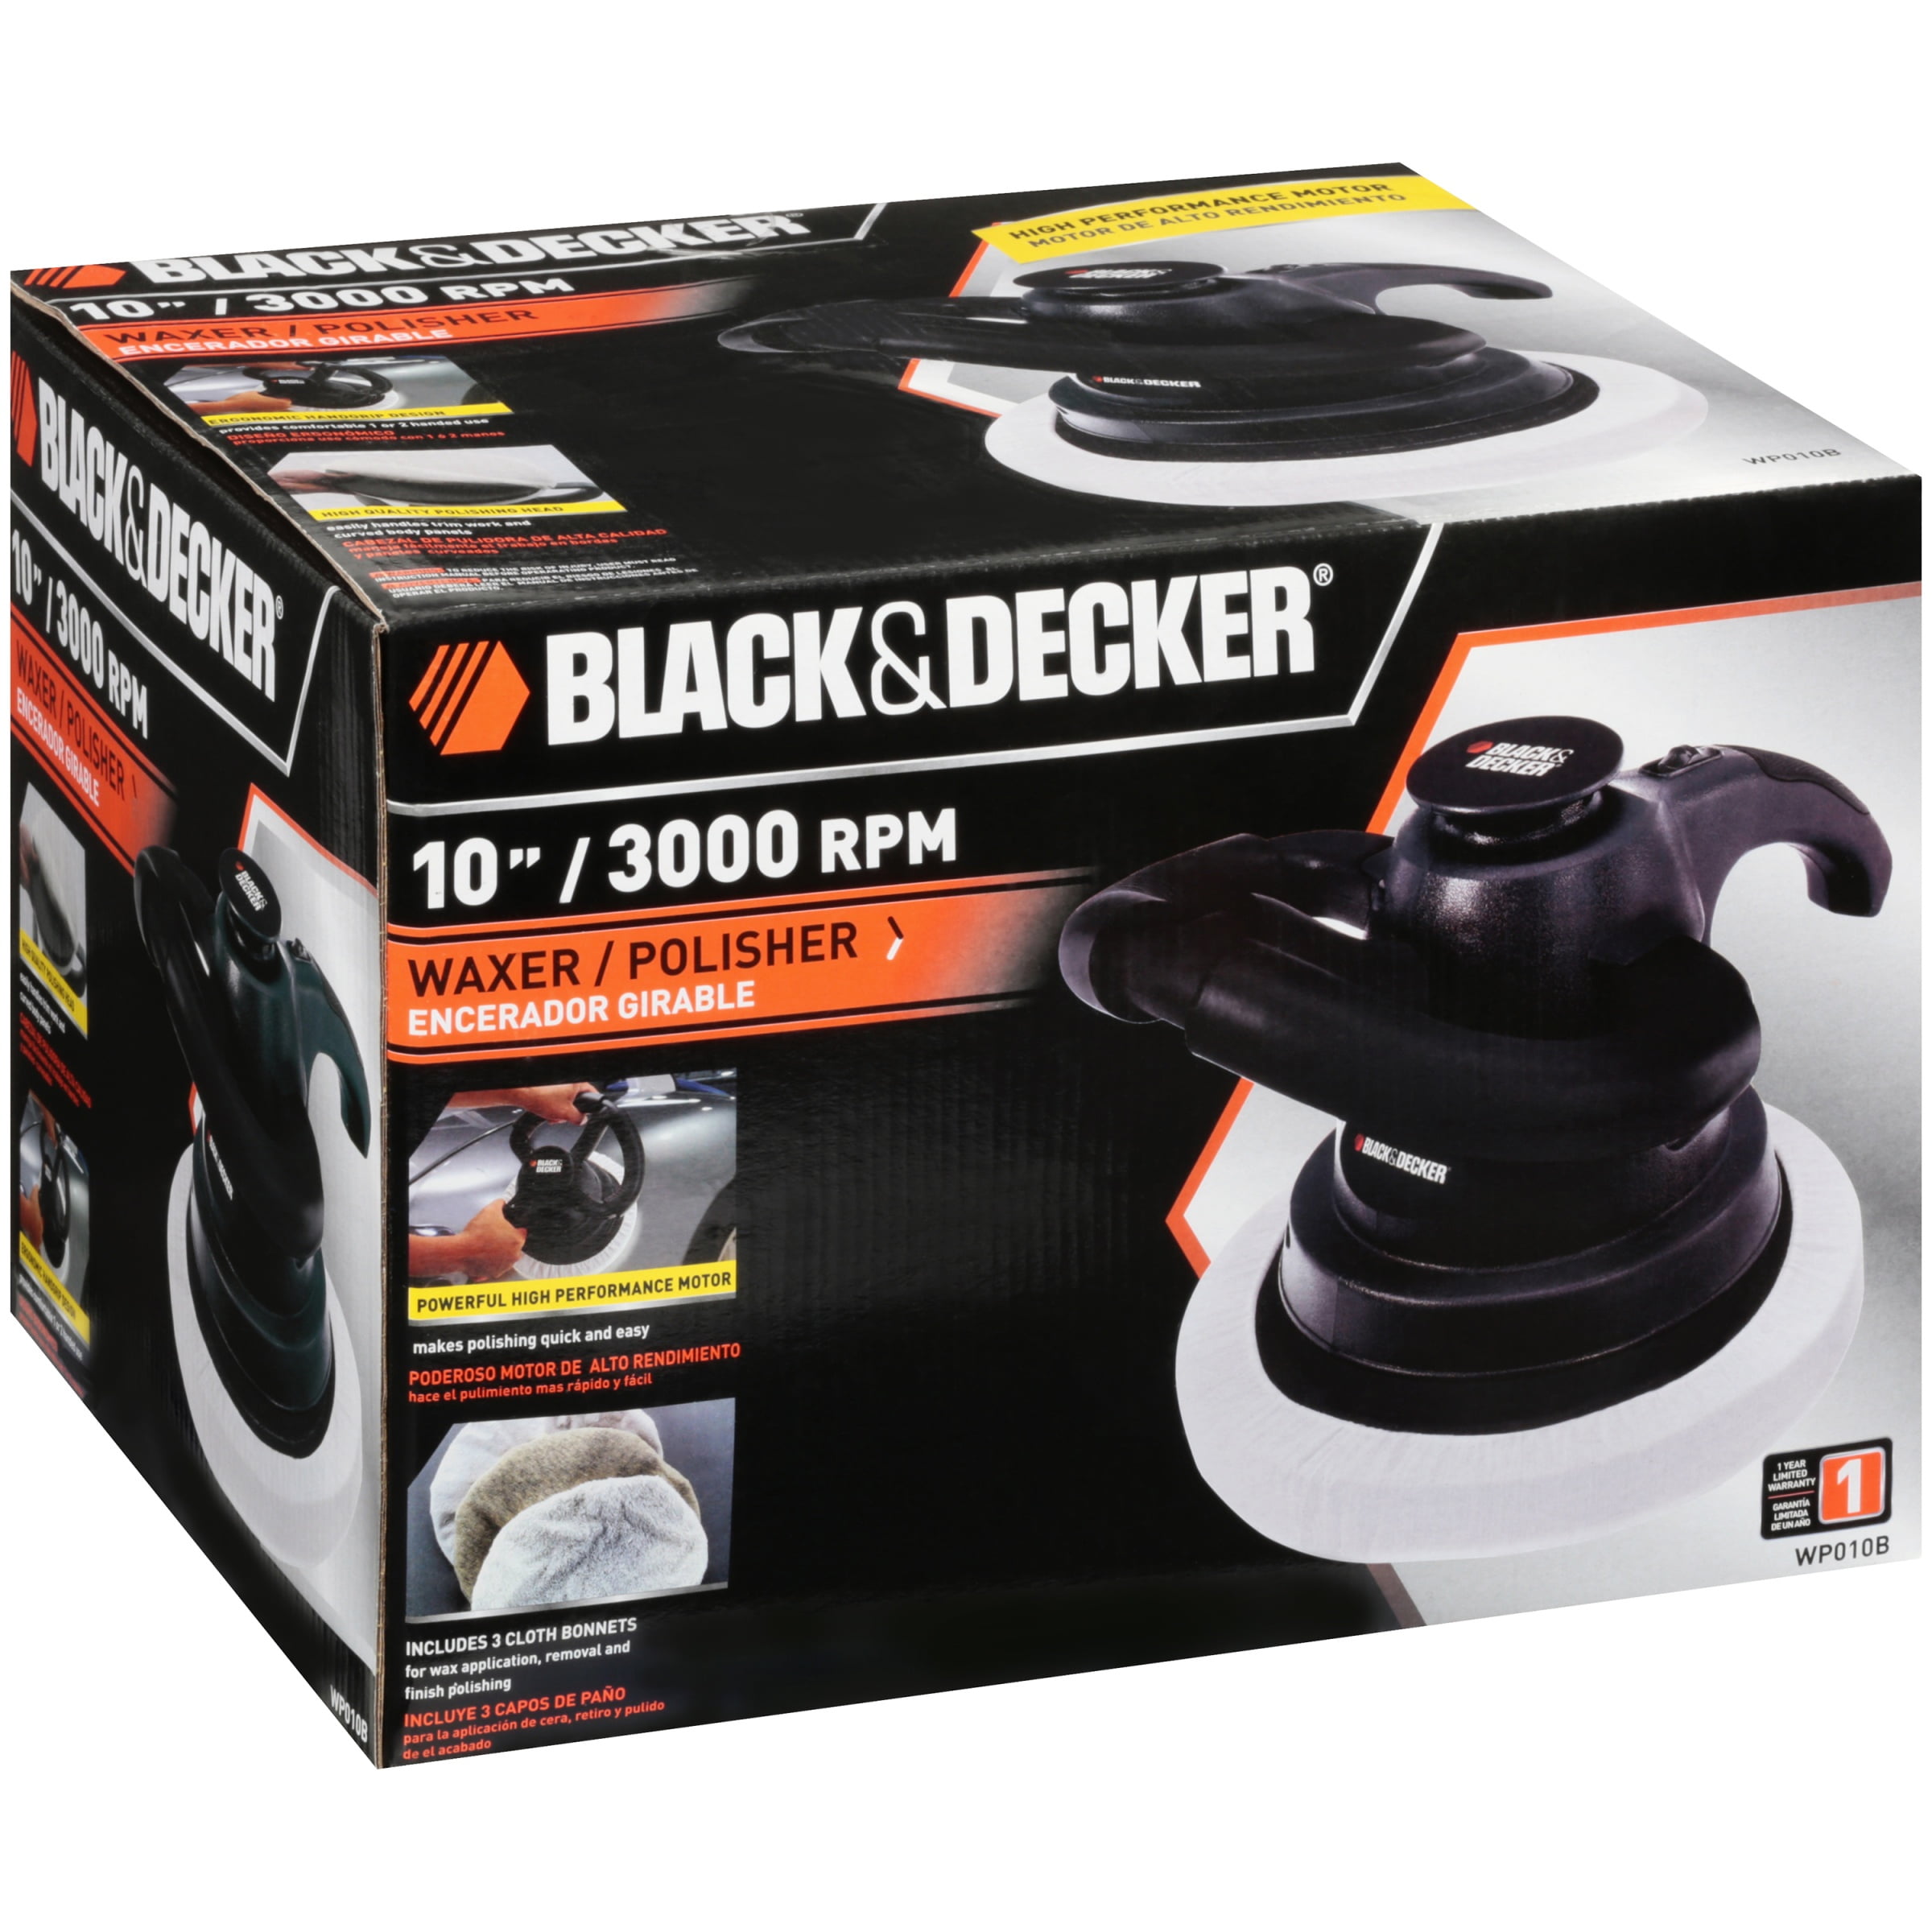 Black & Decker waxer/ polisher - tools - by owner - sale - craigslist